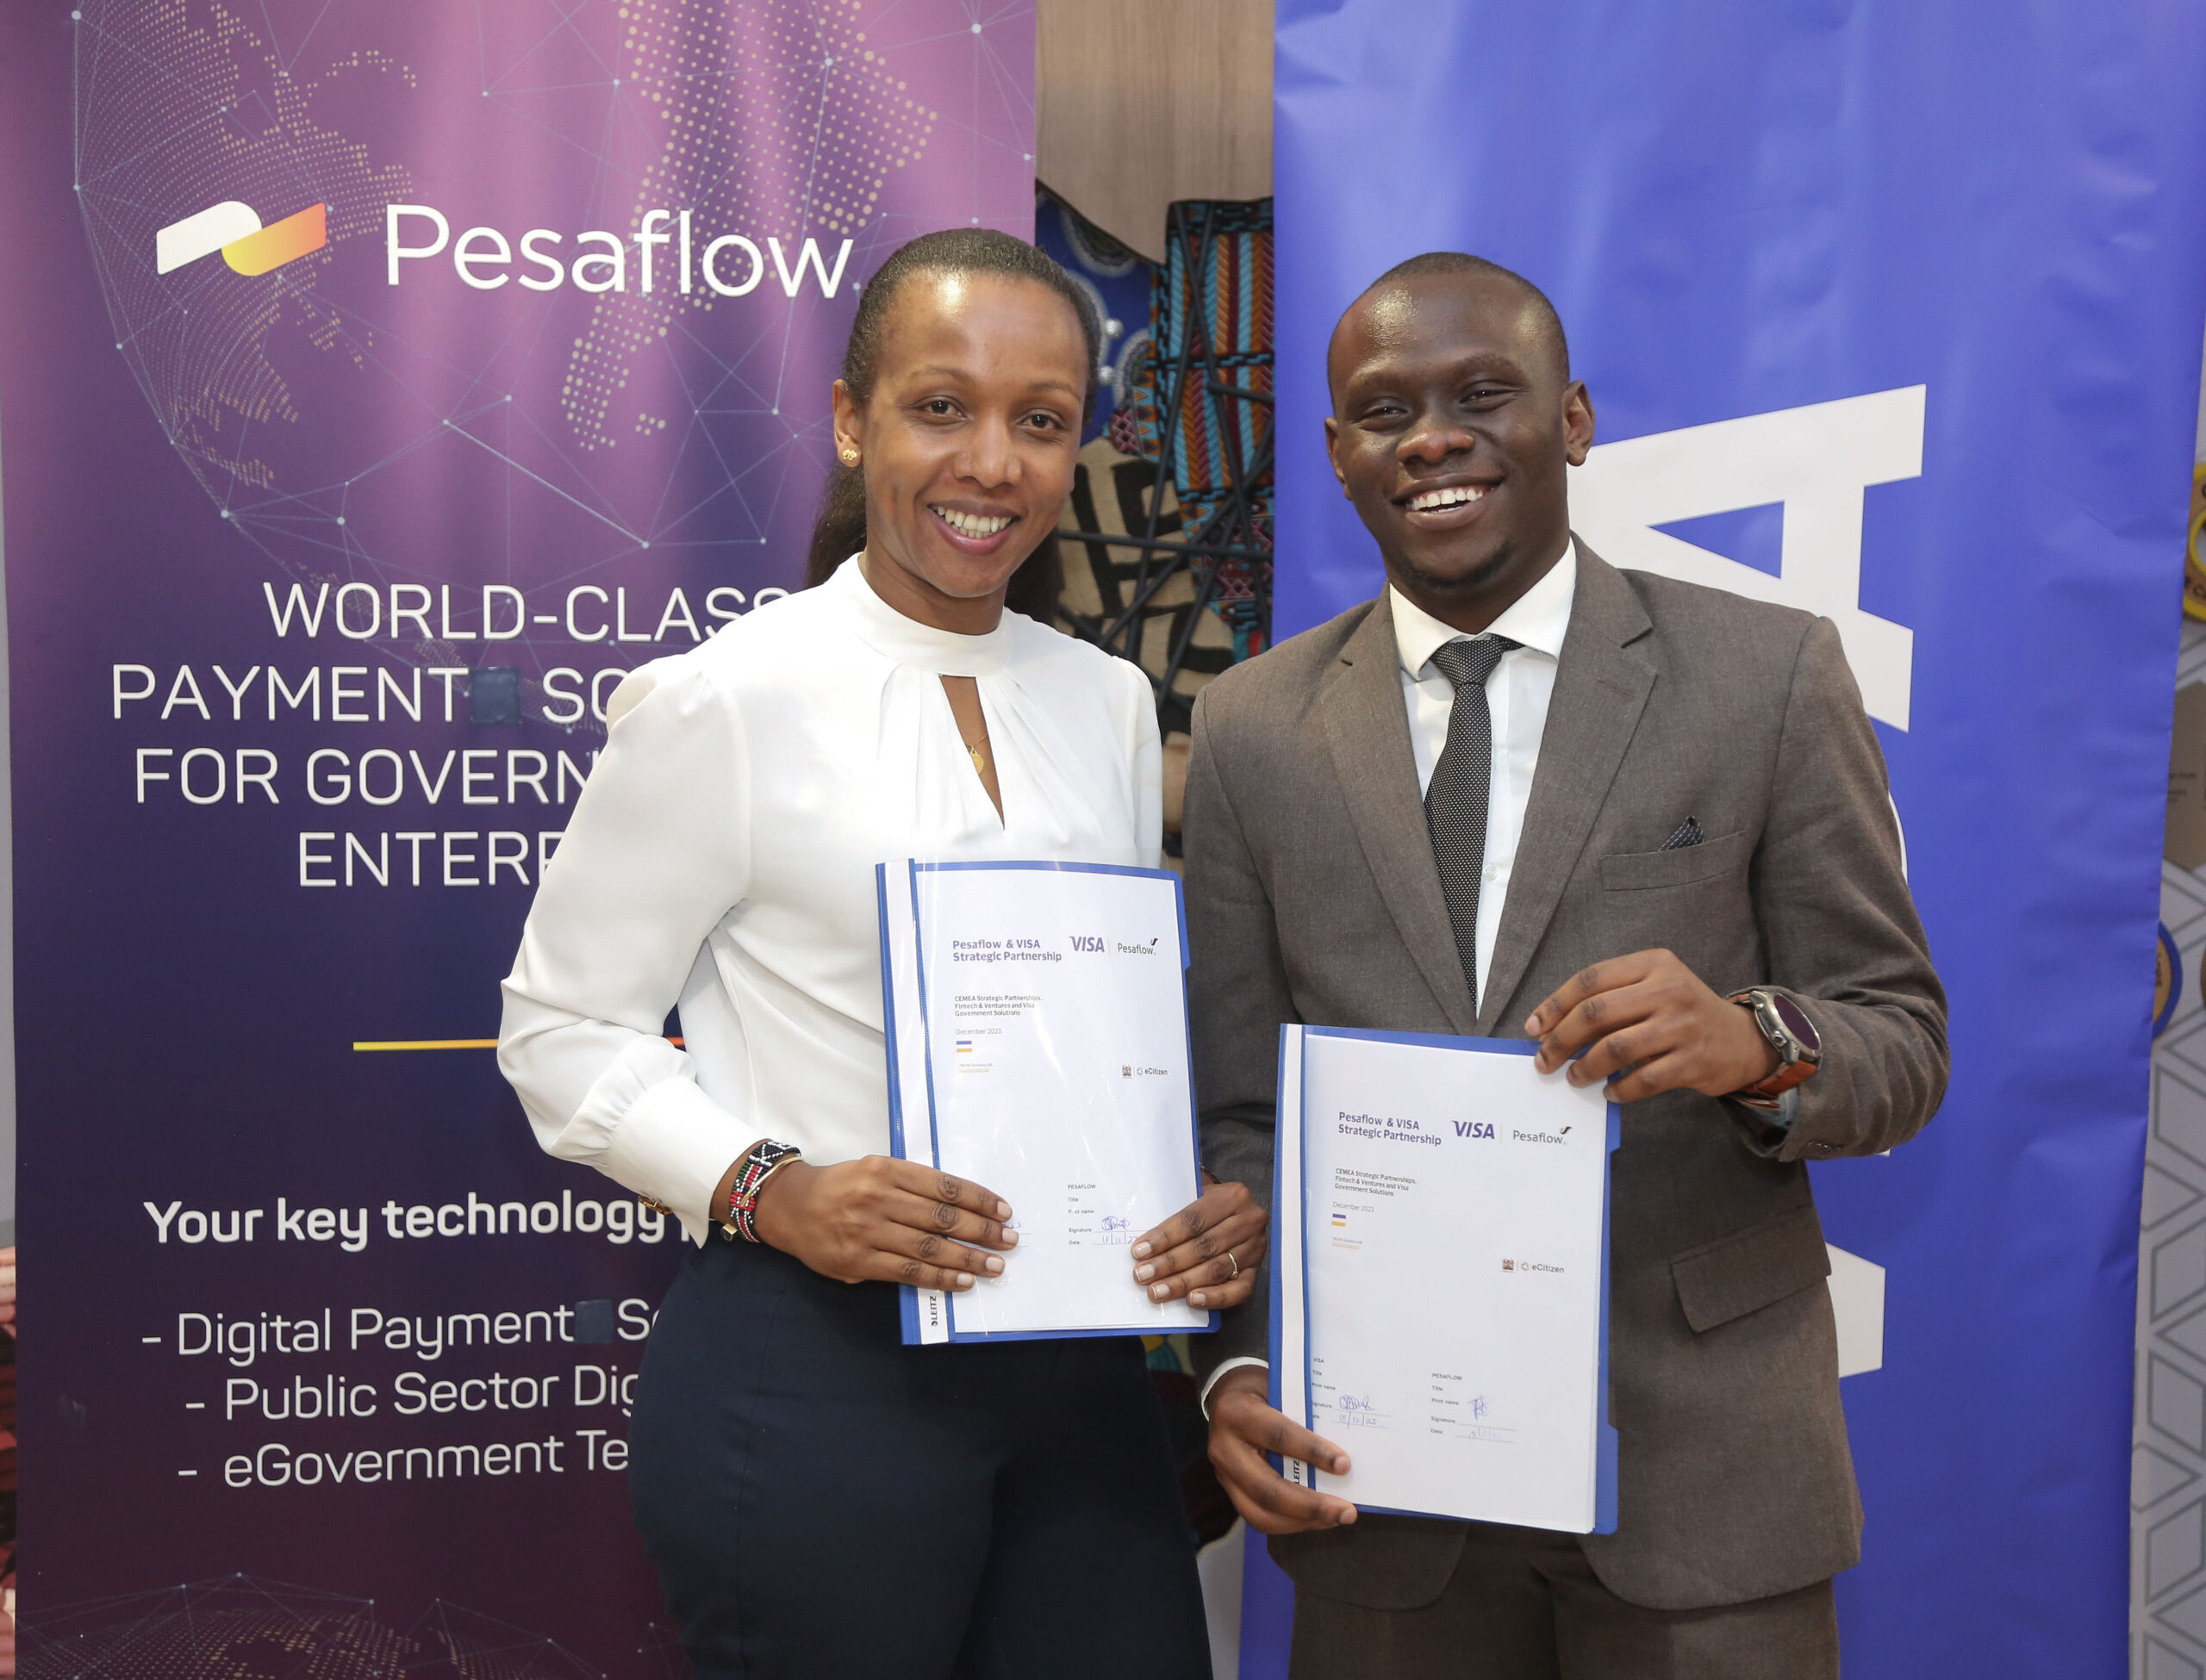 Visa Kenya Country Manager, Eva Ngigi-Sarwari and Pesaflow CEO, Evid Sibi during the strategic partnership signing ceremony between Visa and Pesaflow.